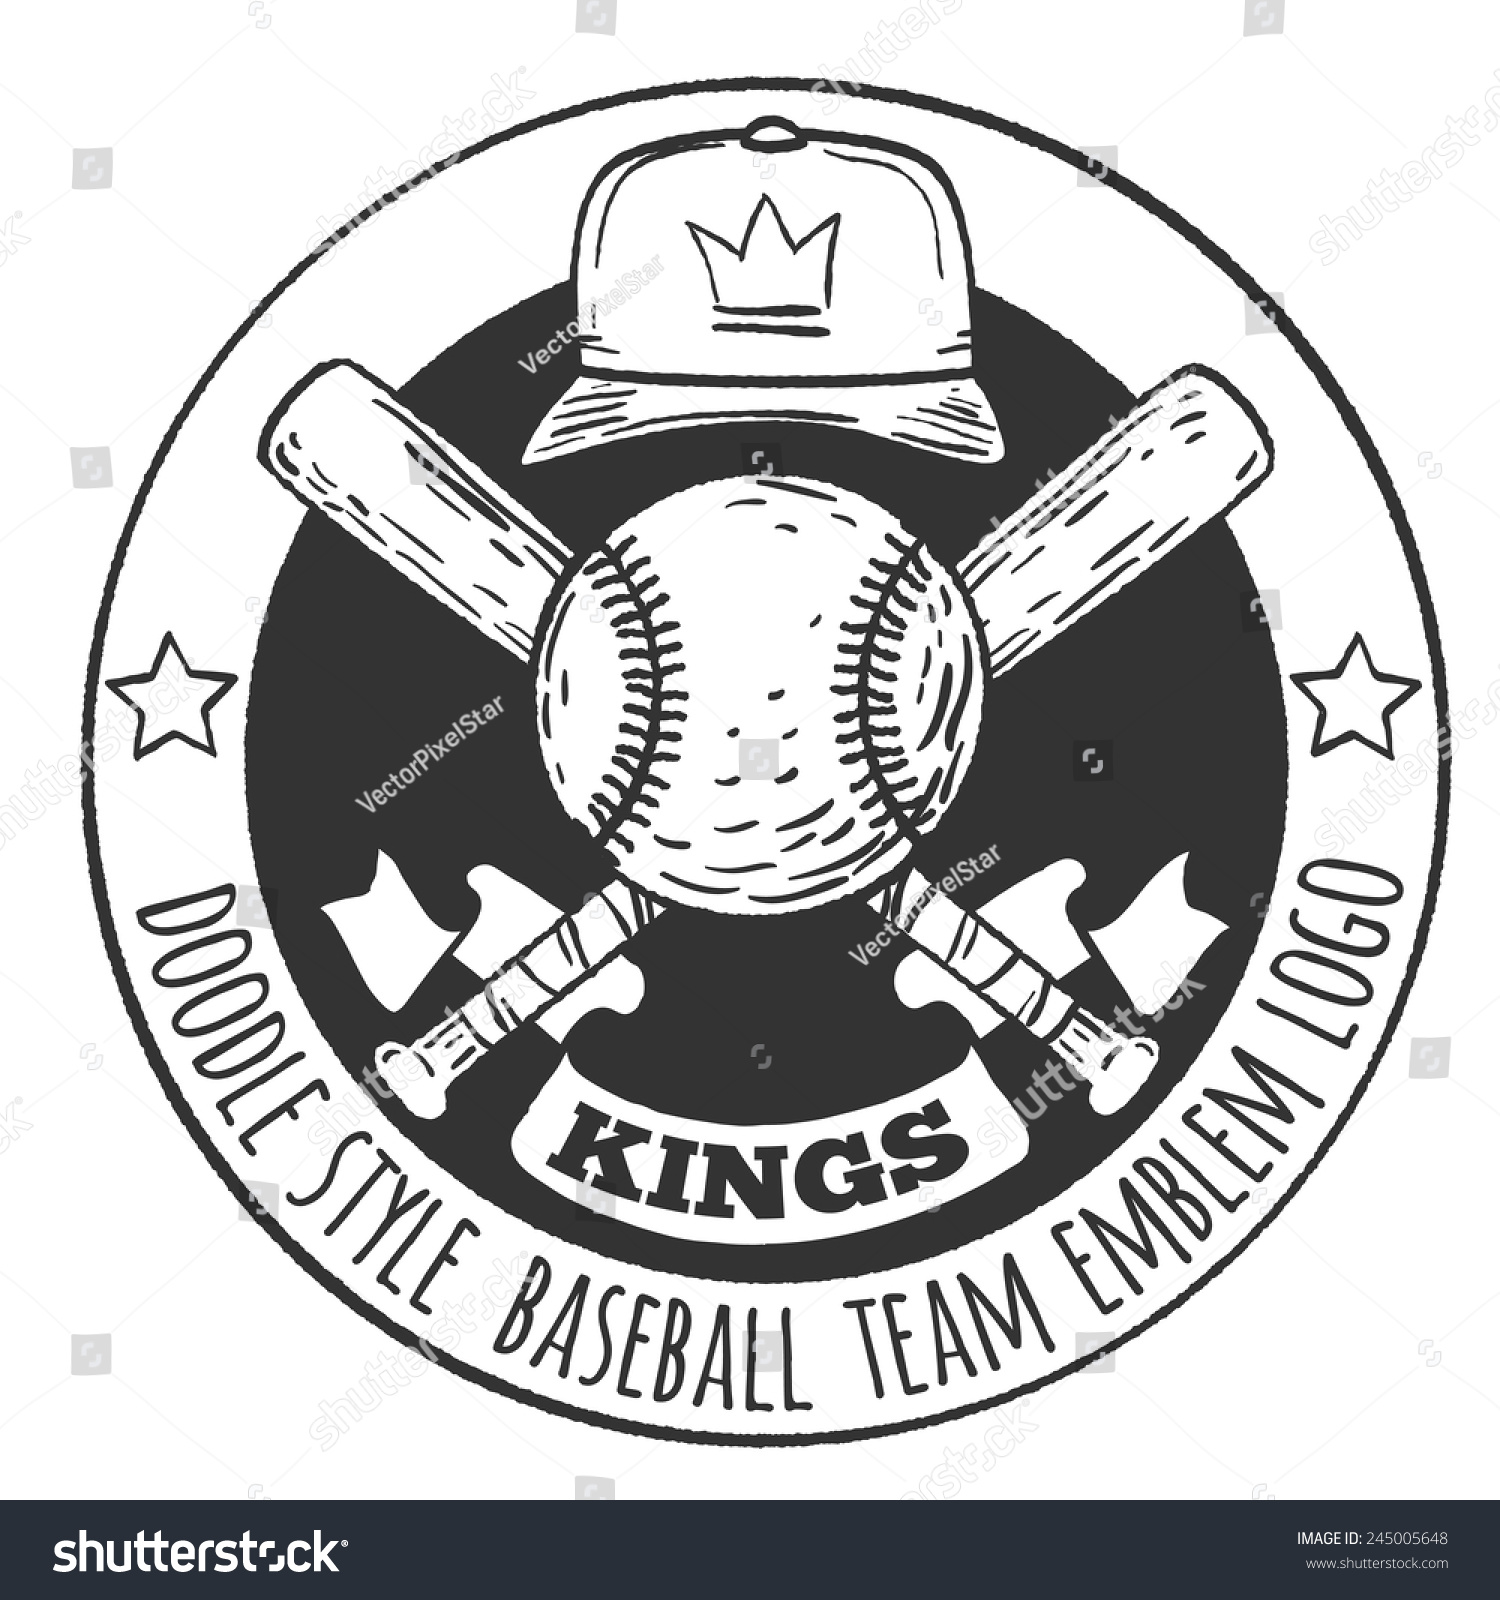 Crossed Baseball Bats Team Emblem Logo Stock Vector Royalty Free 245005648